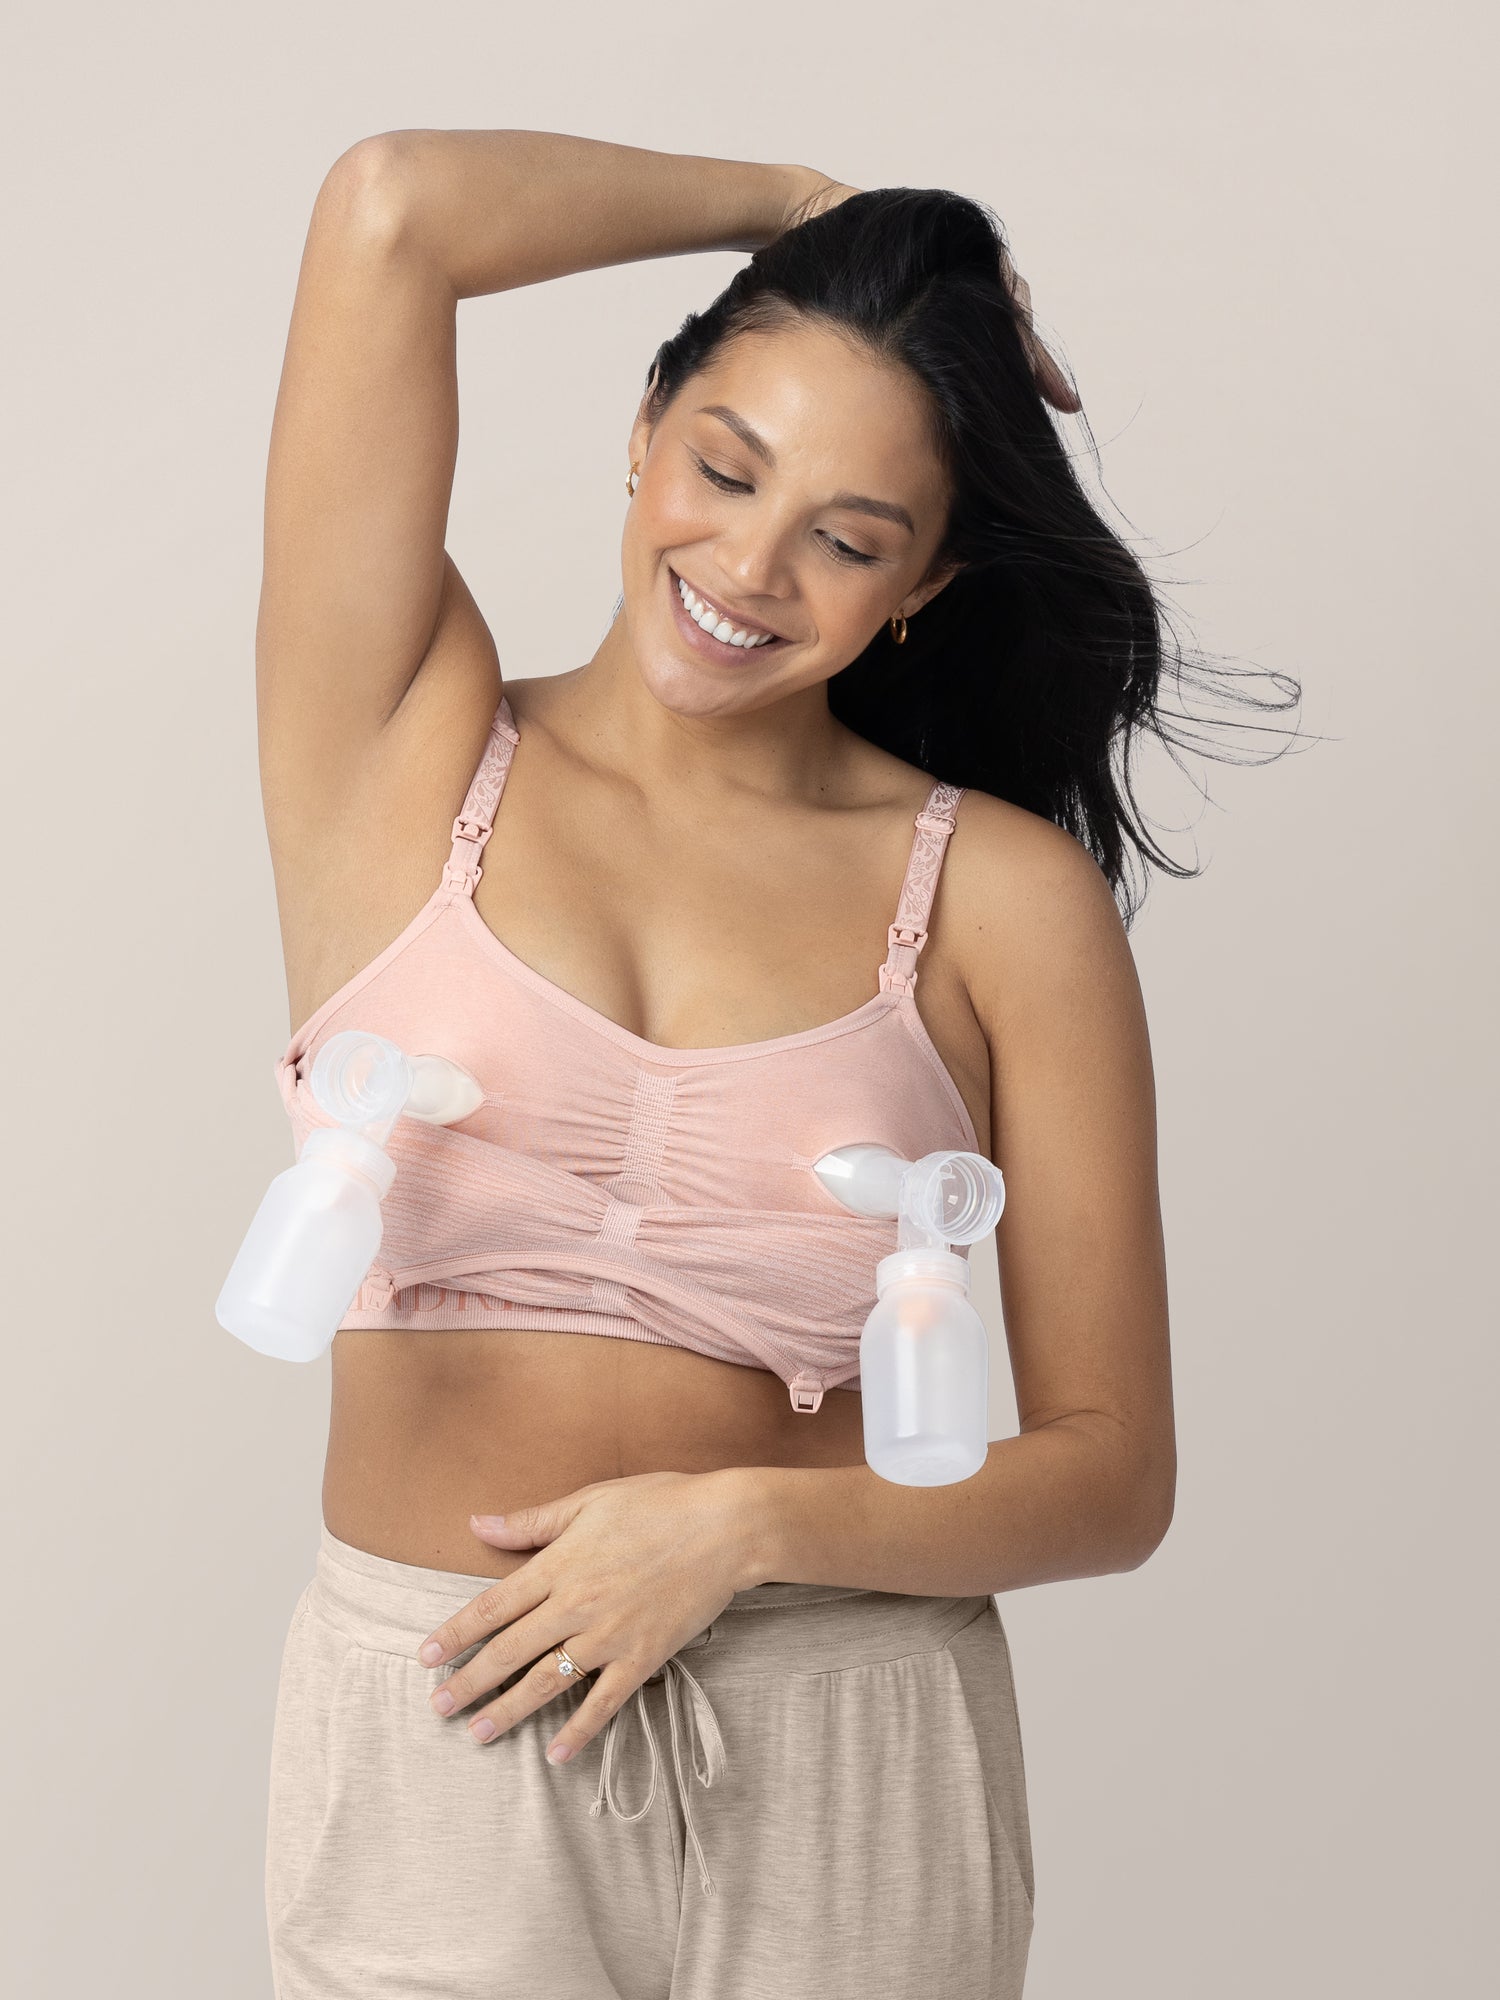 Model wearing the Hands-Free Pumping & Nursing Bra in Soft Pink